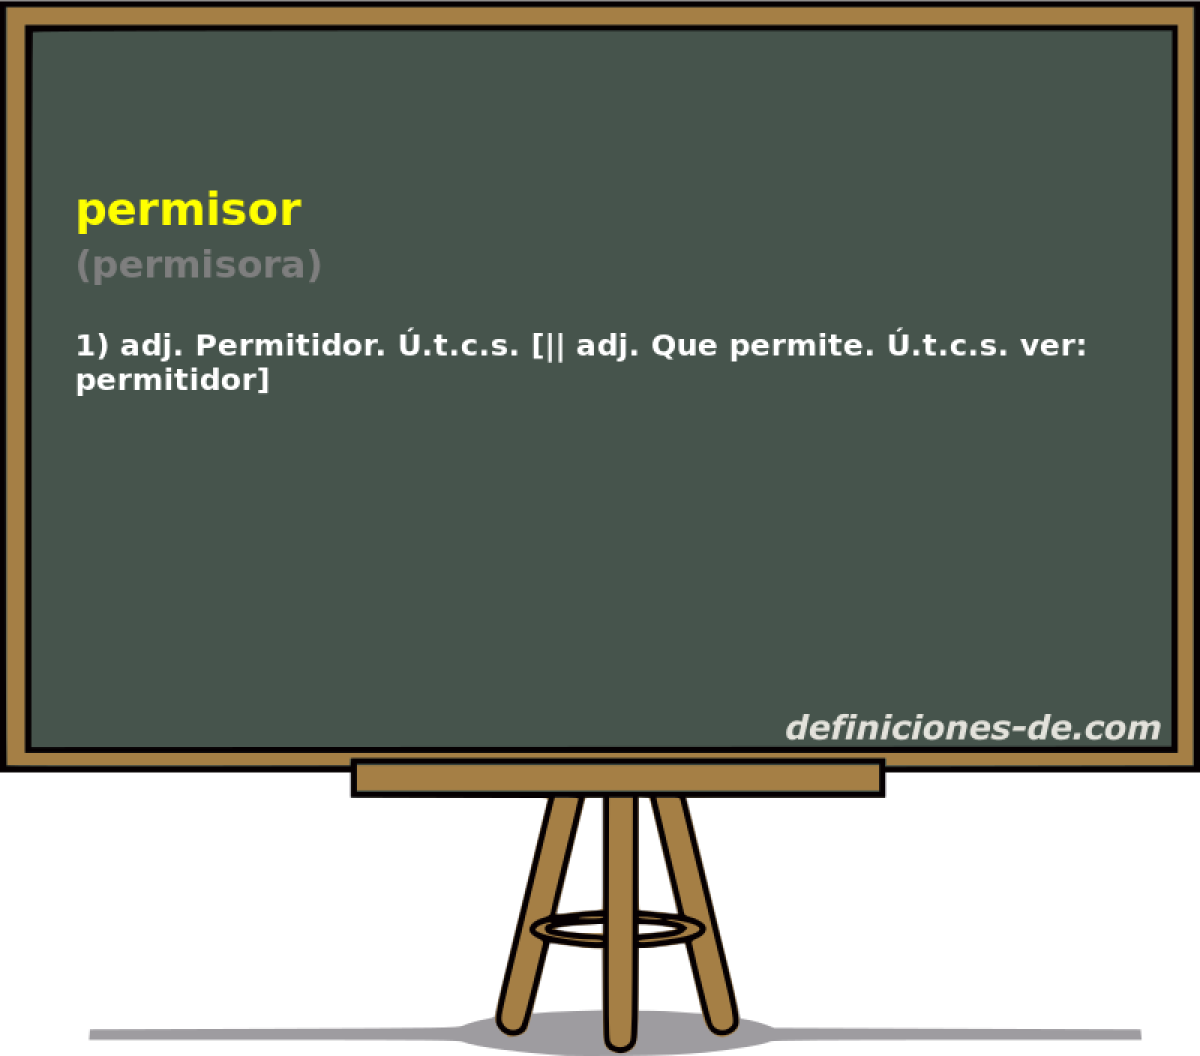 permisor (permisora)